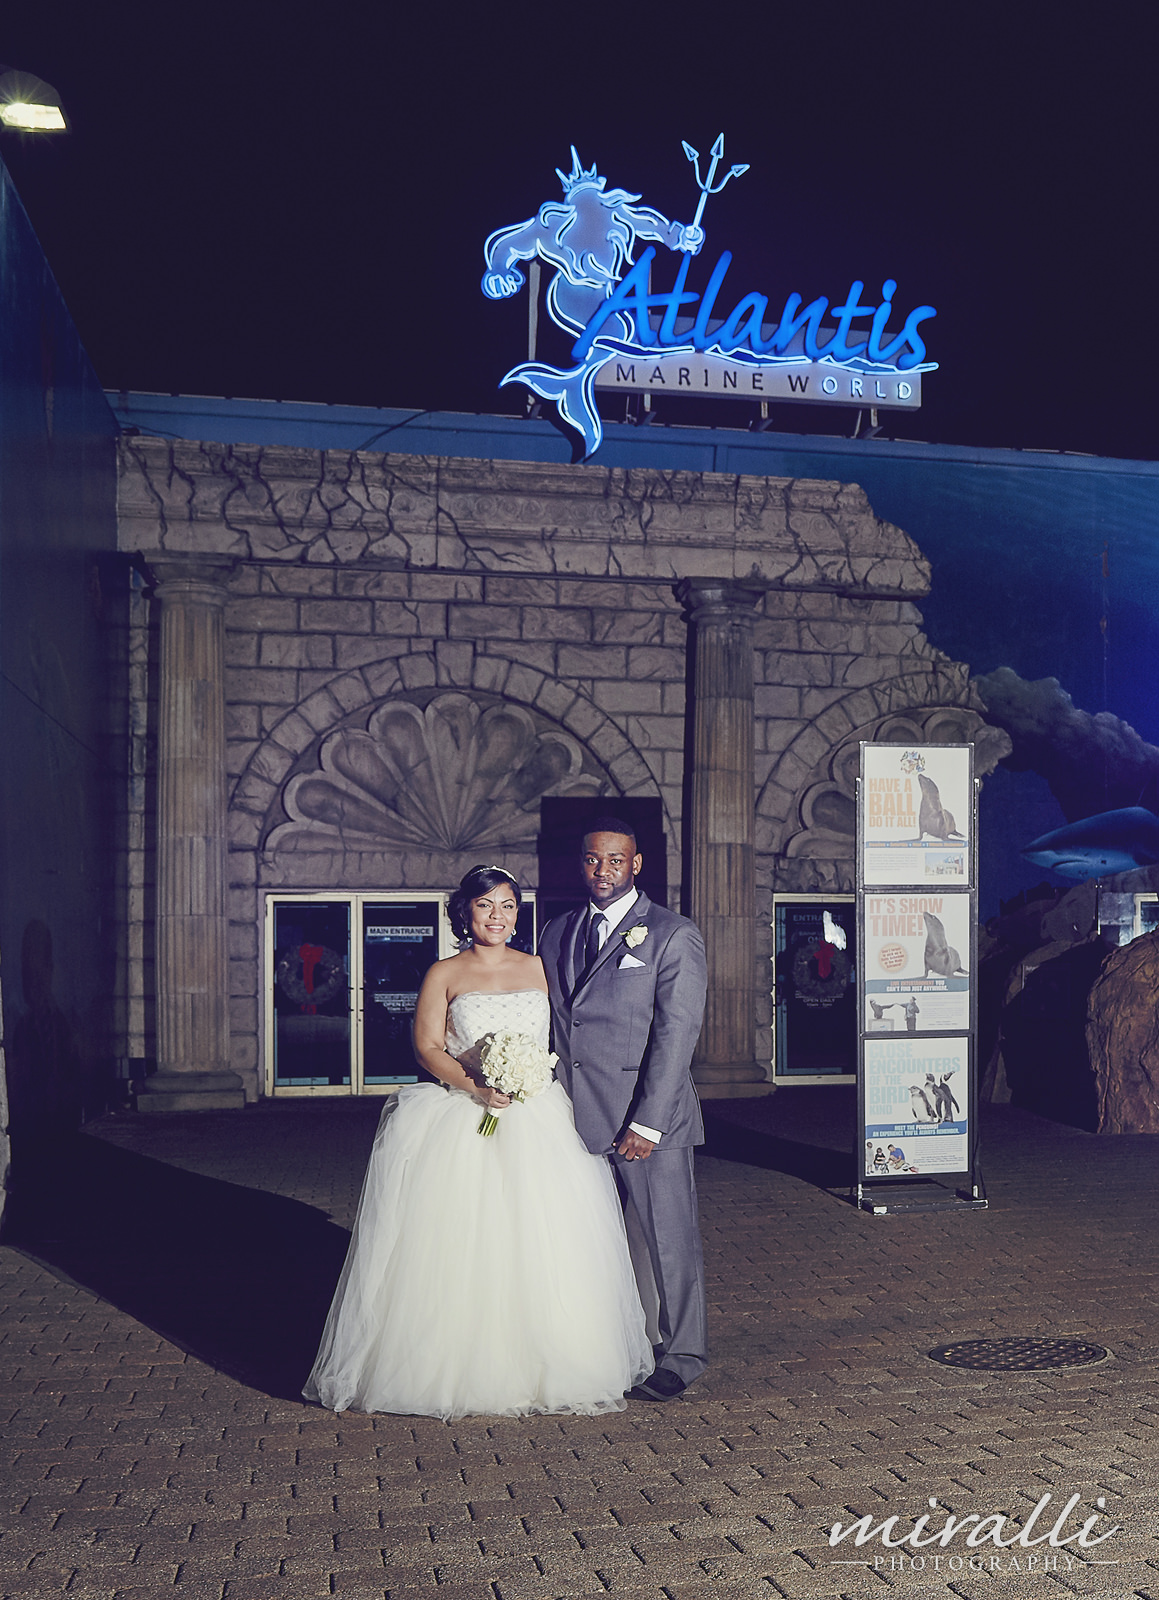 Atlantis Aquarium Wedding Photos by Miralli Photography